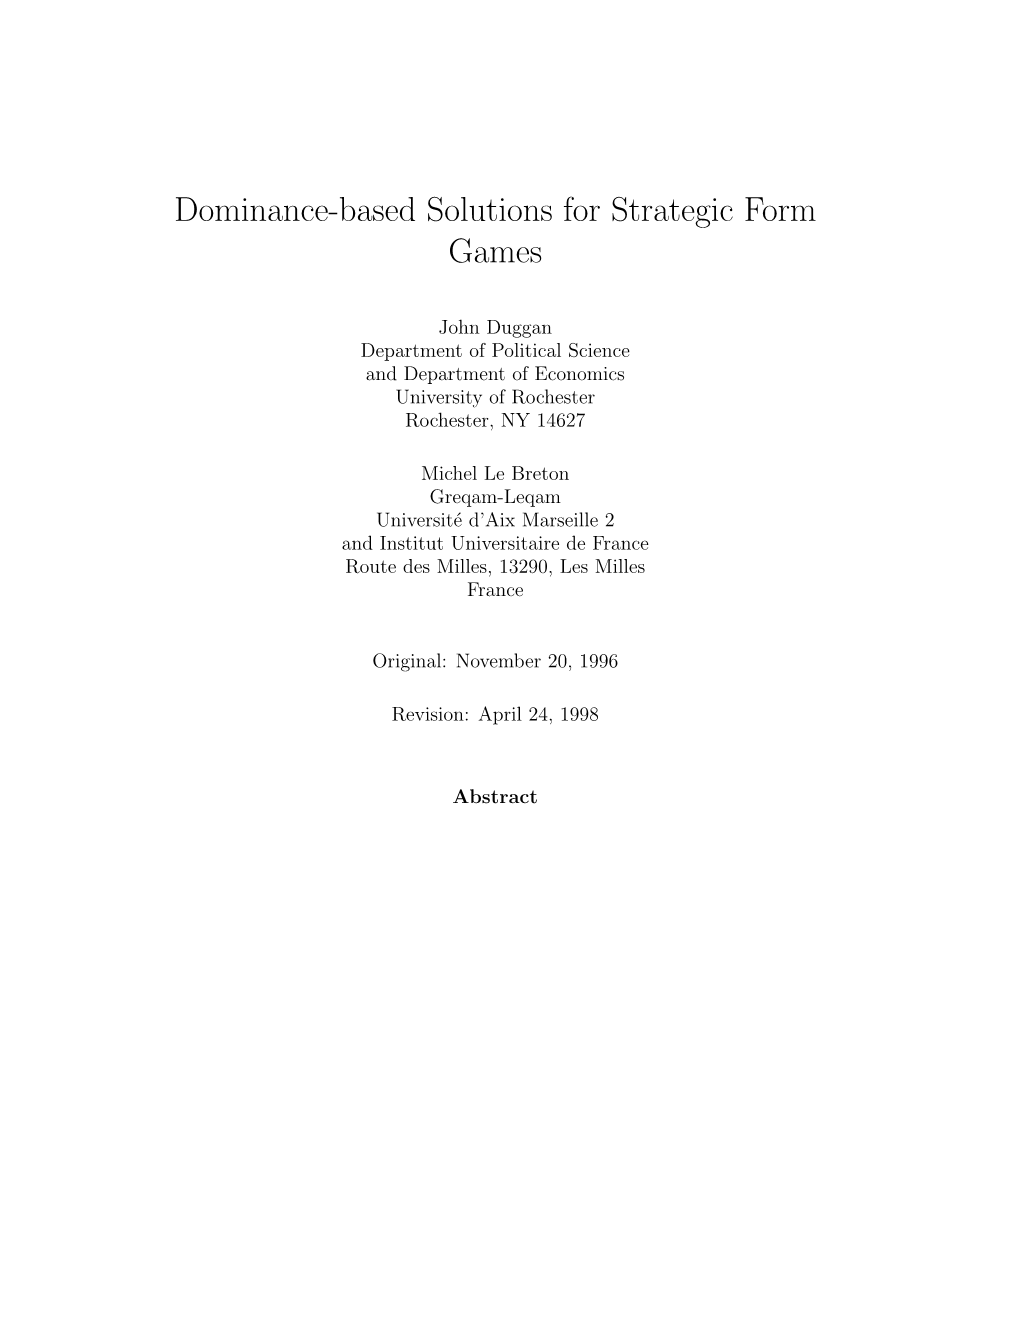 Dominance-Based Solutions for Strategic Form Games